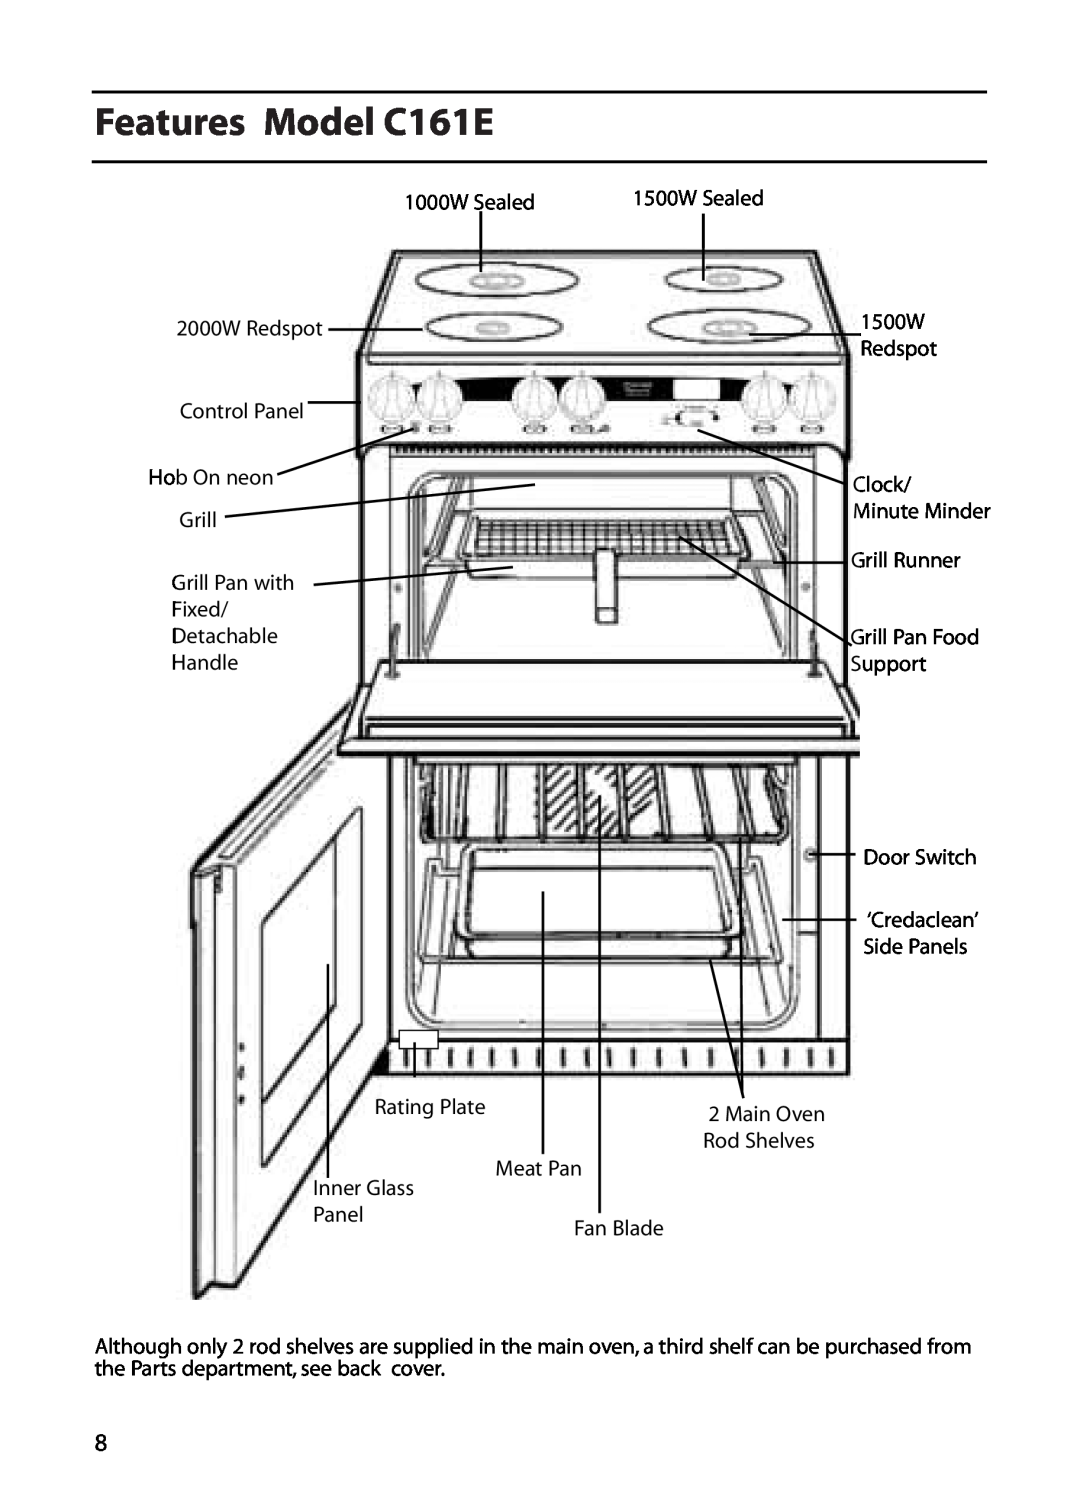 Creda manual Features Model C161E 